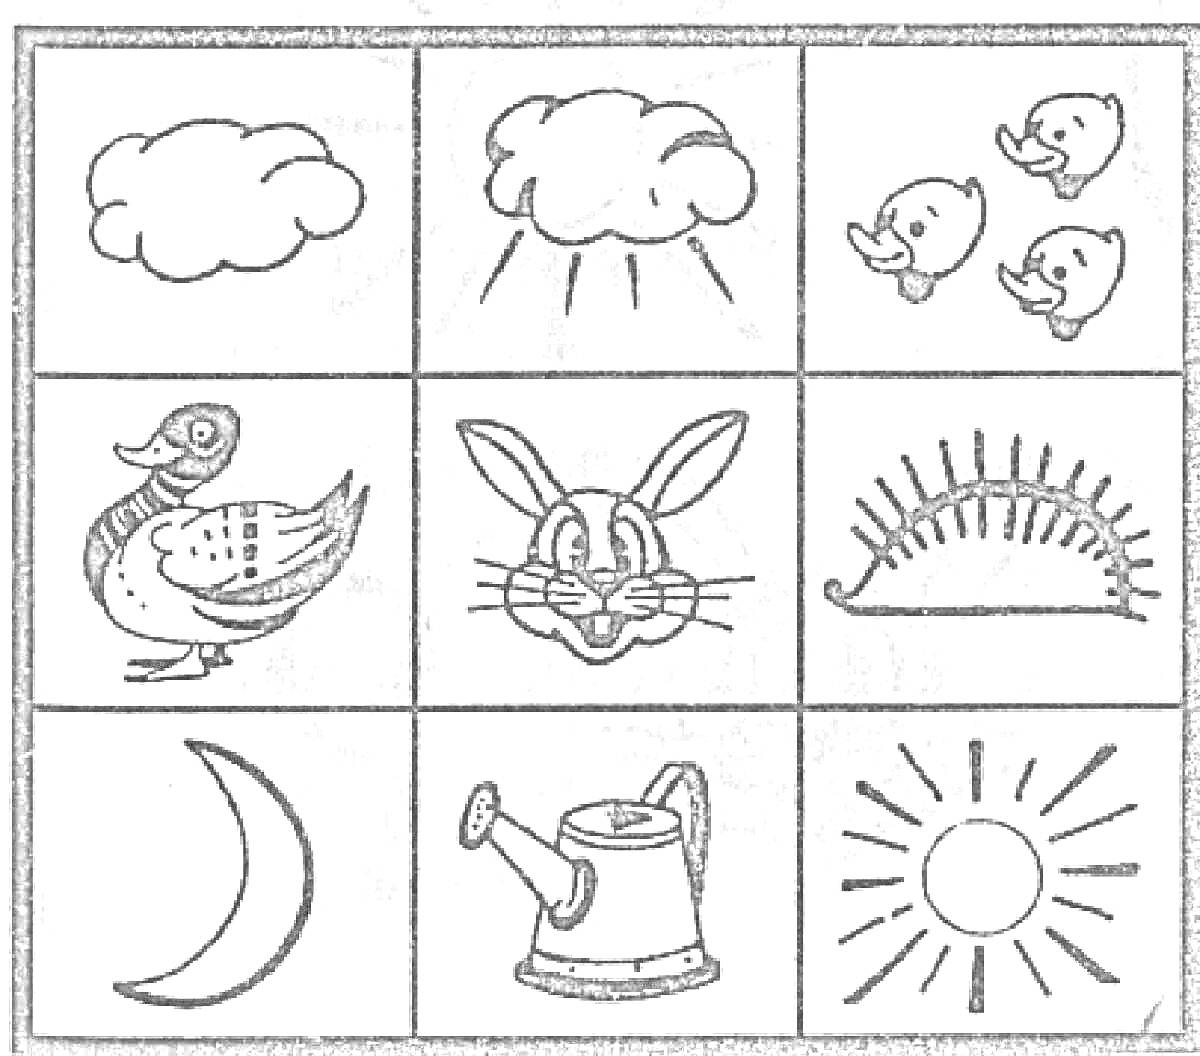 На раскраске изображено: Дождь, Поросёнок, Утка, Заяц, Еж, Луна, Лейка, Солнце, Страх, Облака